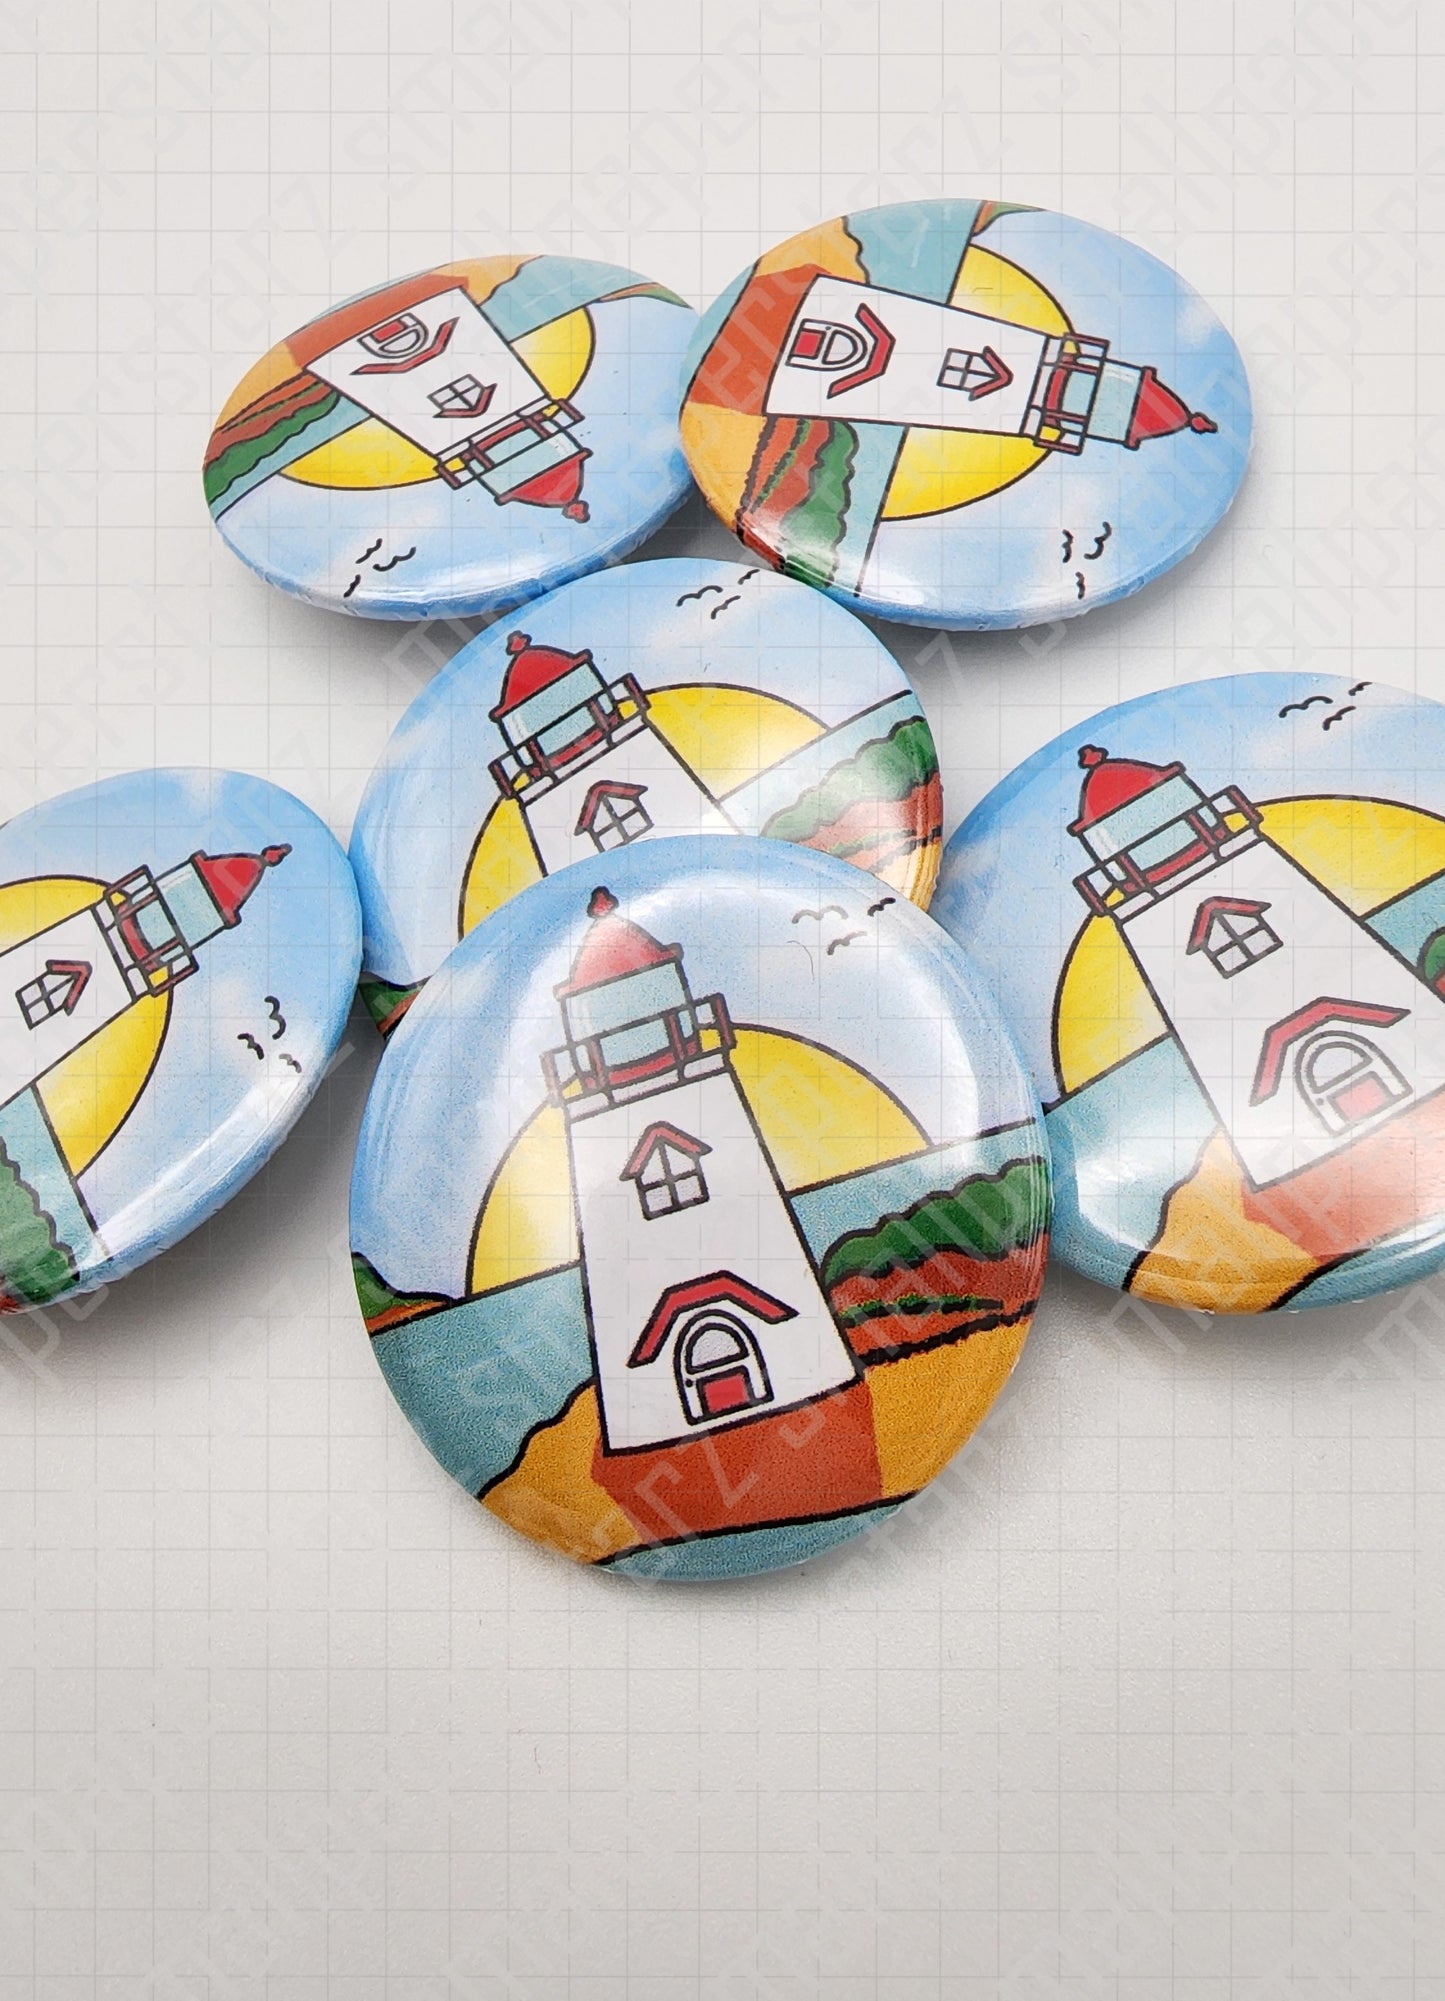 L011 - Lighthouse Island Life Pinback Button / Badge